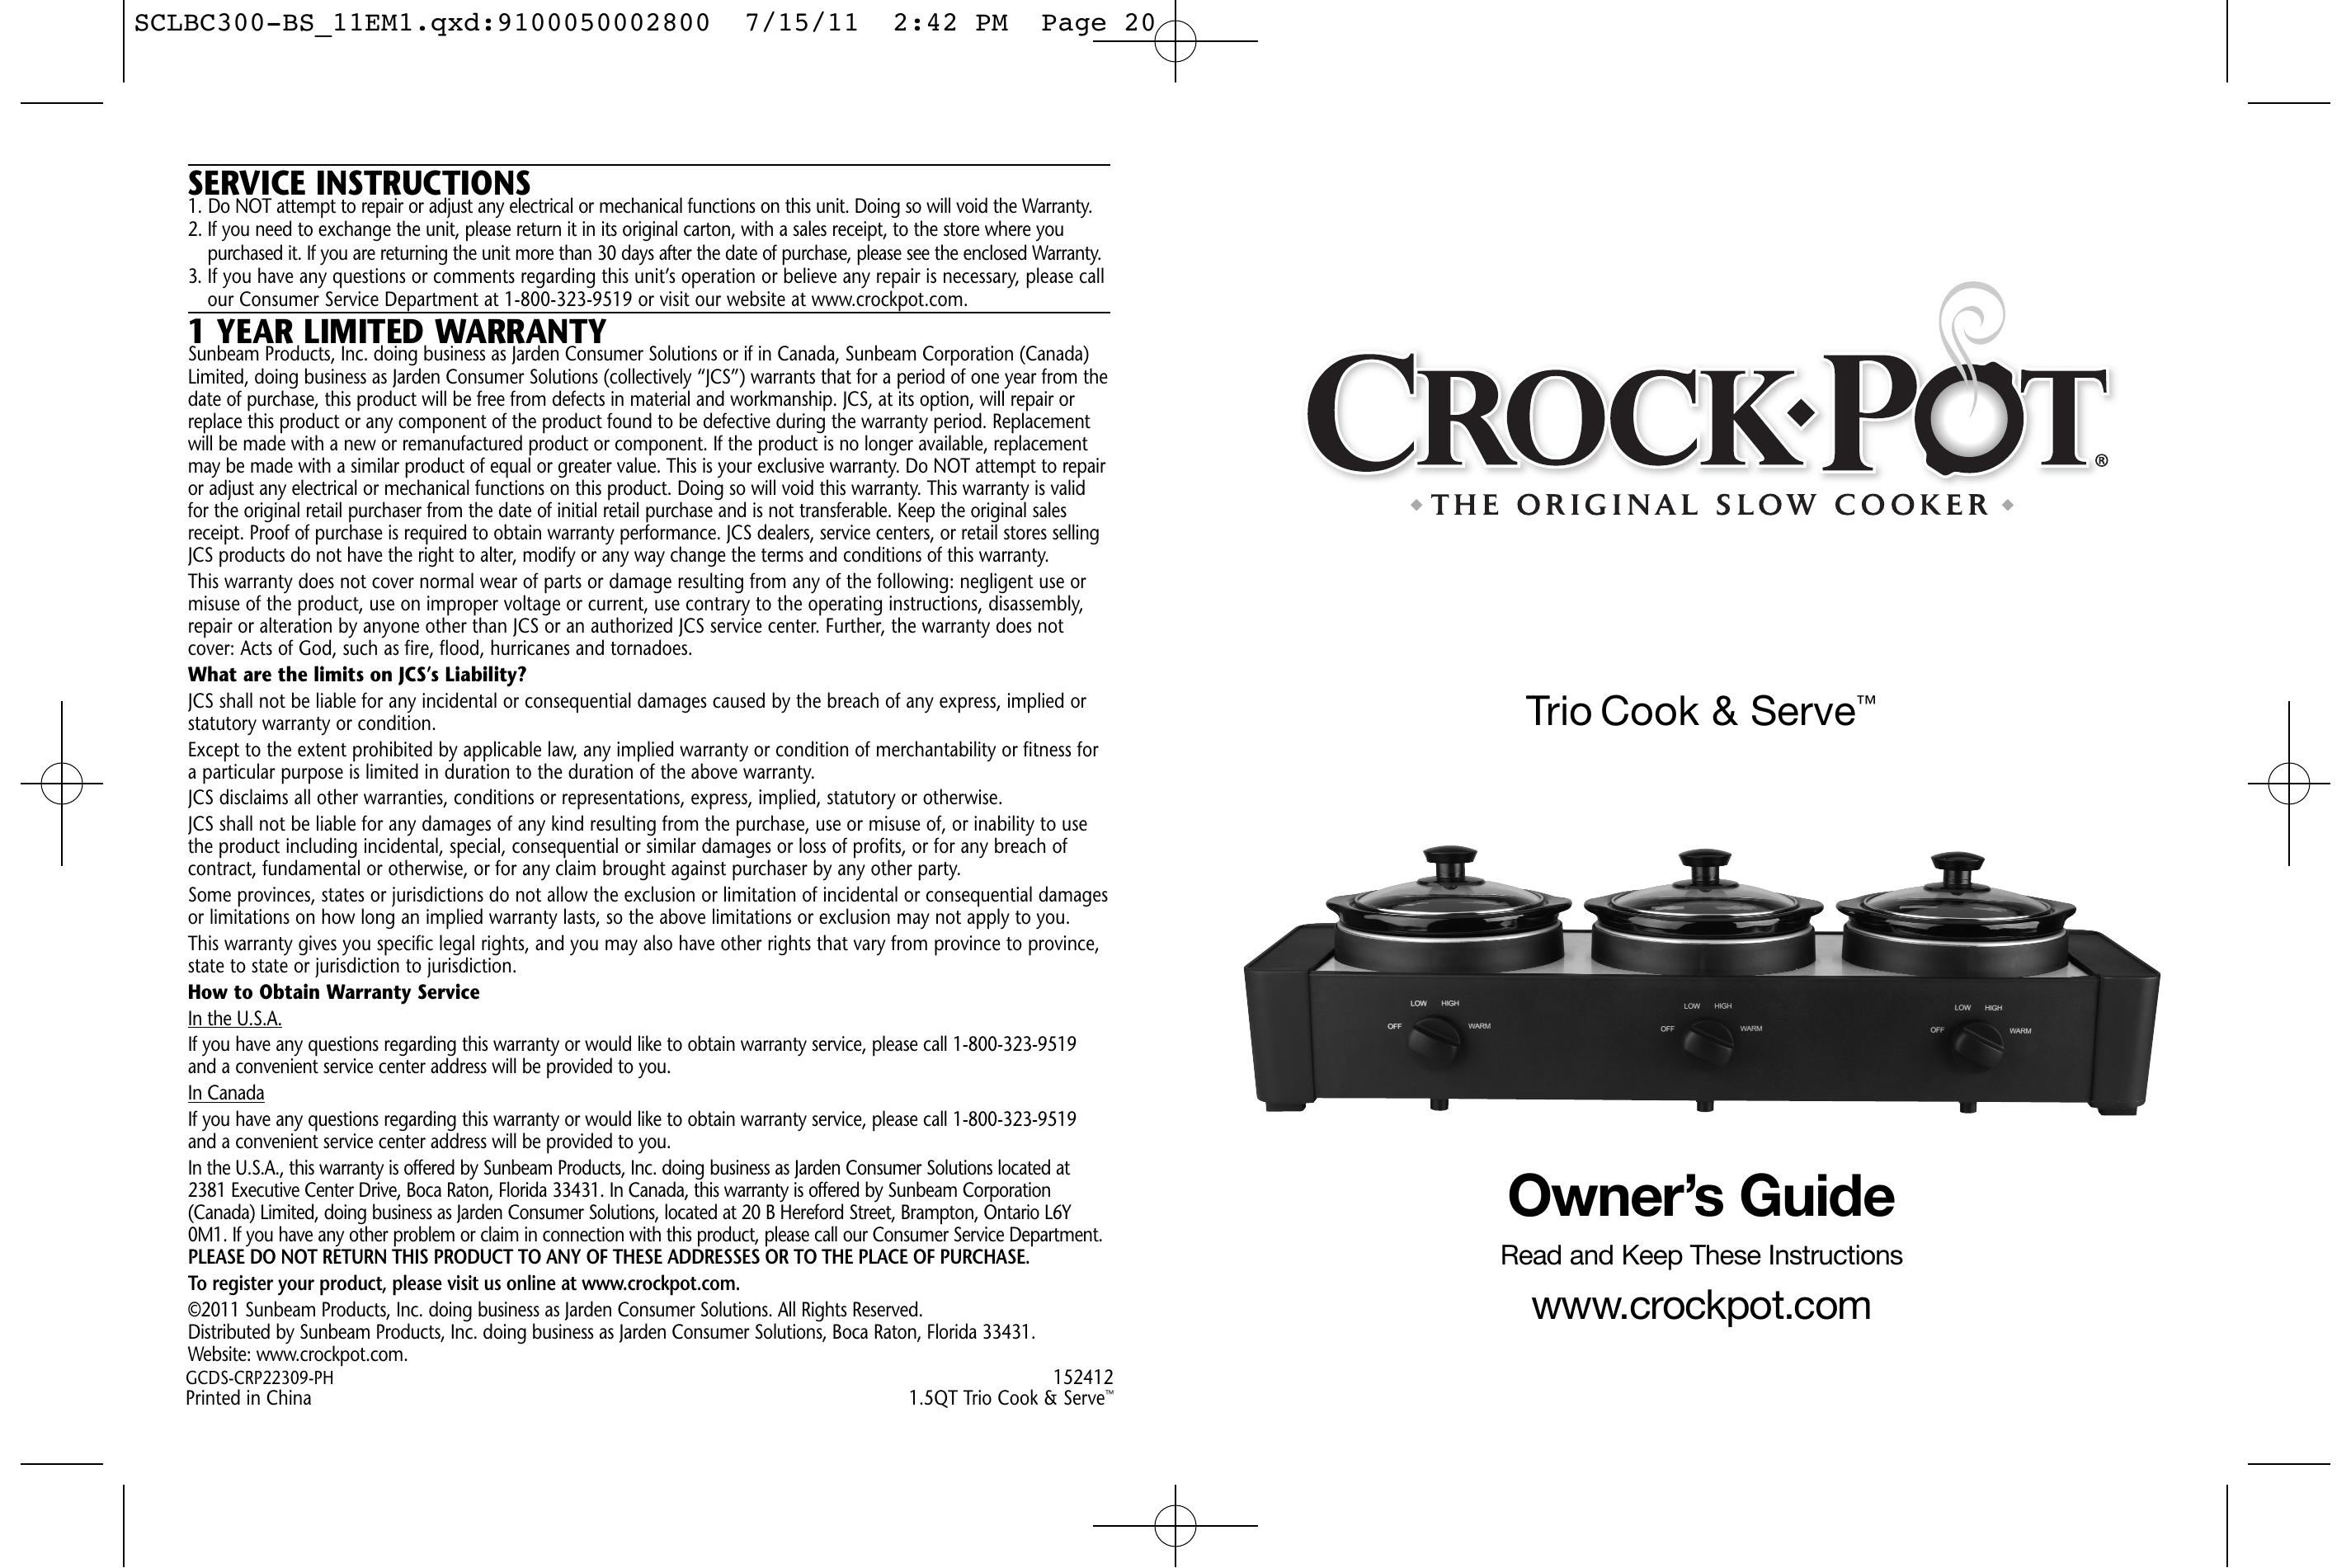 Crock-Pot Trio Cook & Serve Slow Cooker User Manual